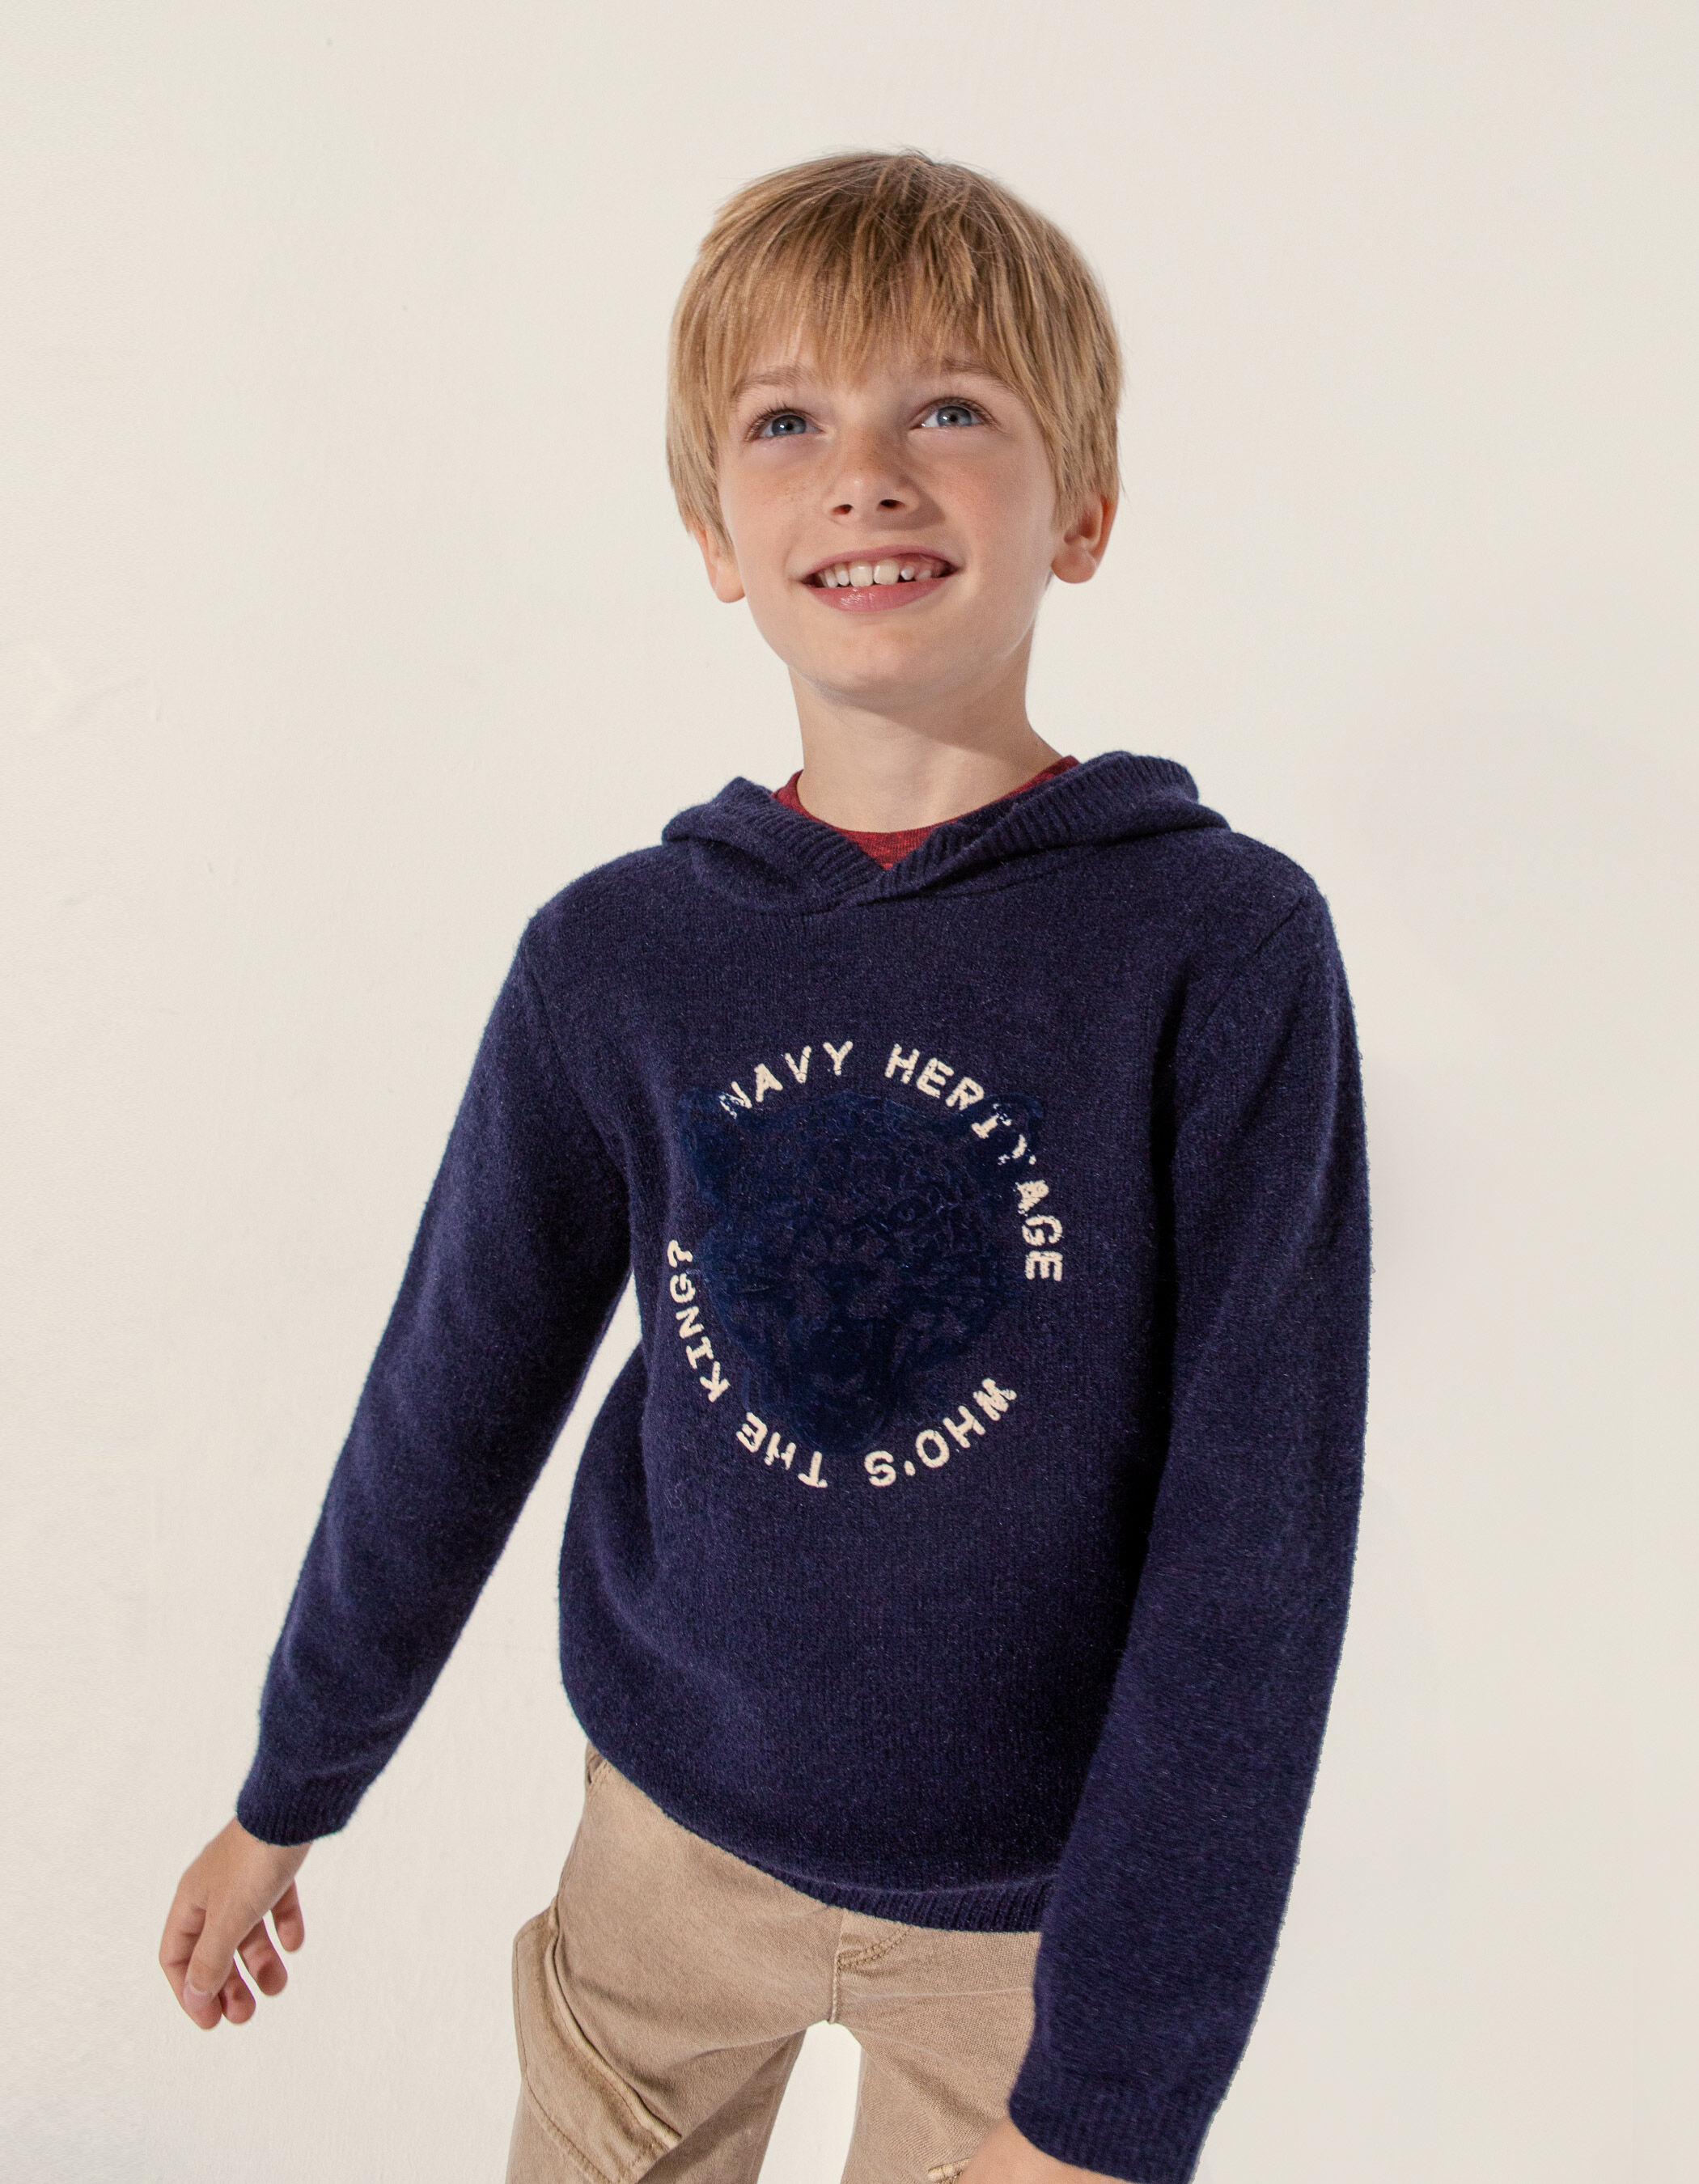 Baby handgebreide trui met muts Kleding Jongenskleding Babykleding voor jongens Truien 